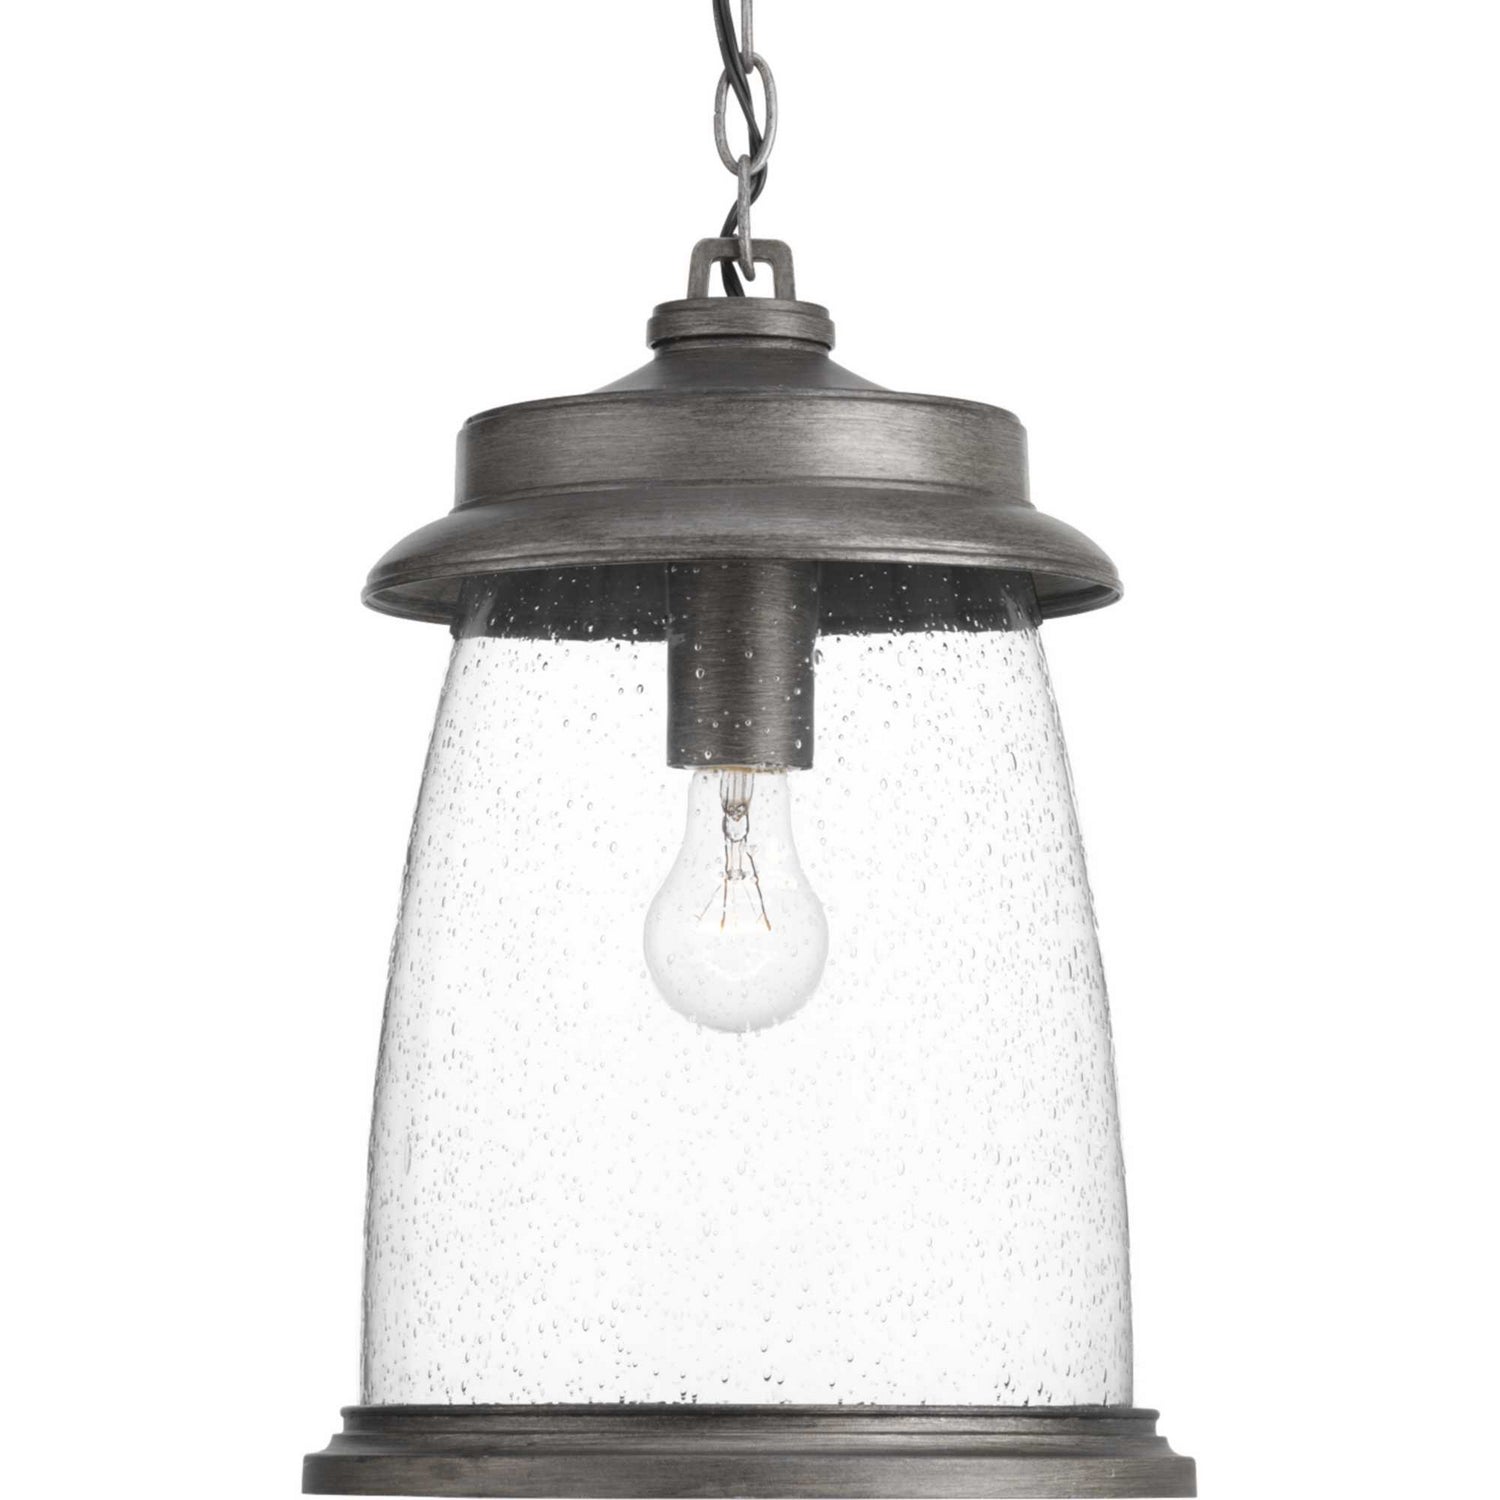 Progress Canada - One Light Hanging Lantern - Conover - Antique Pewter- Union Lighting Luminaires Decor